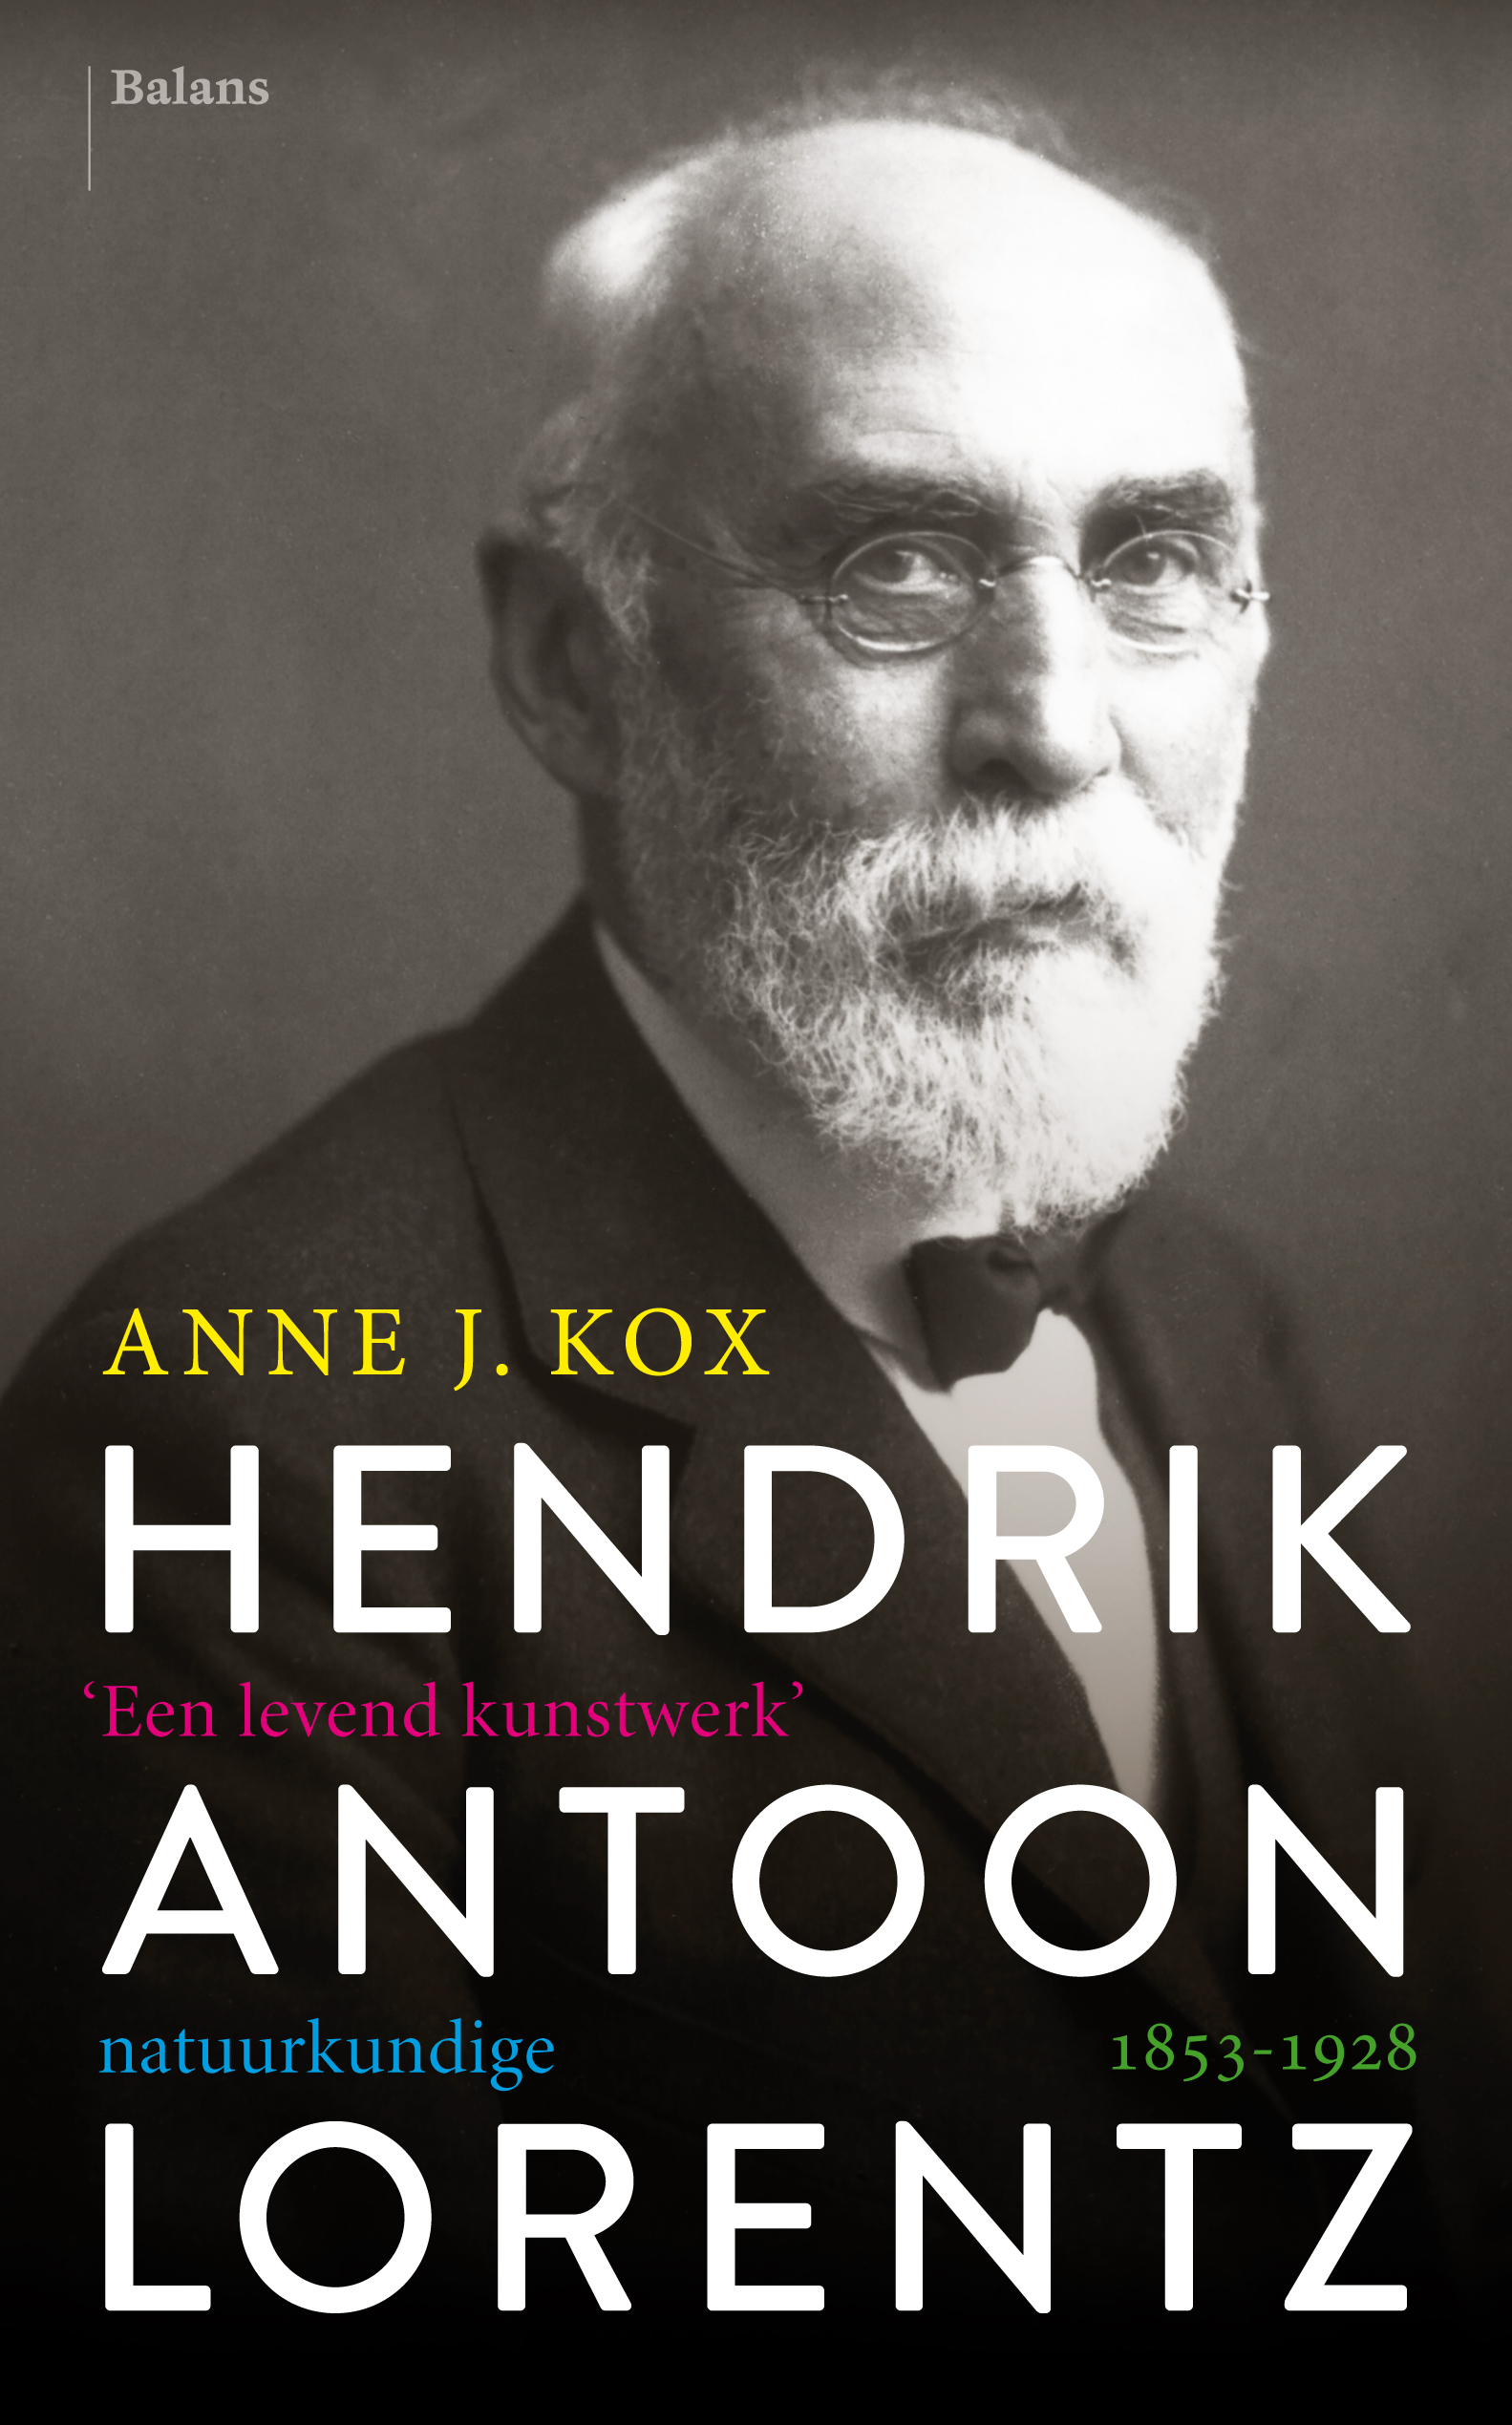 Hendrik Antoon Lorentz, natuurkundige (1853-1928